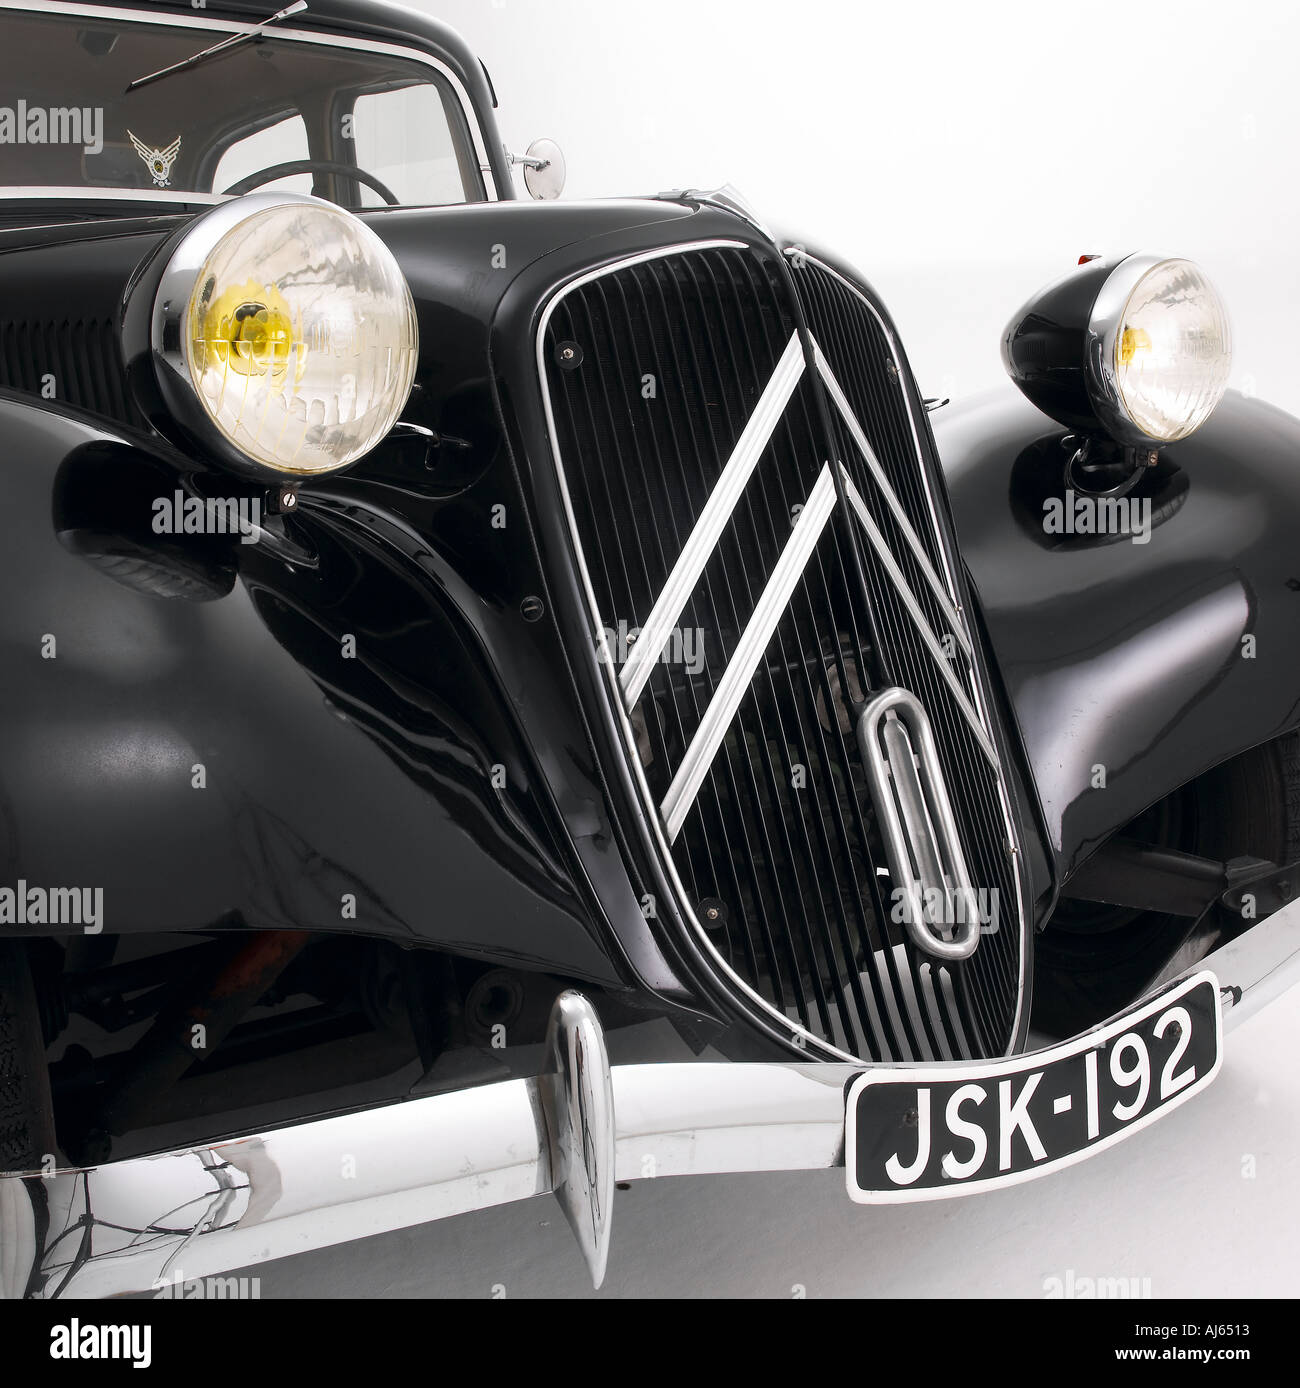 1934-Citroen Traction Avant Stockfoto